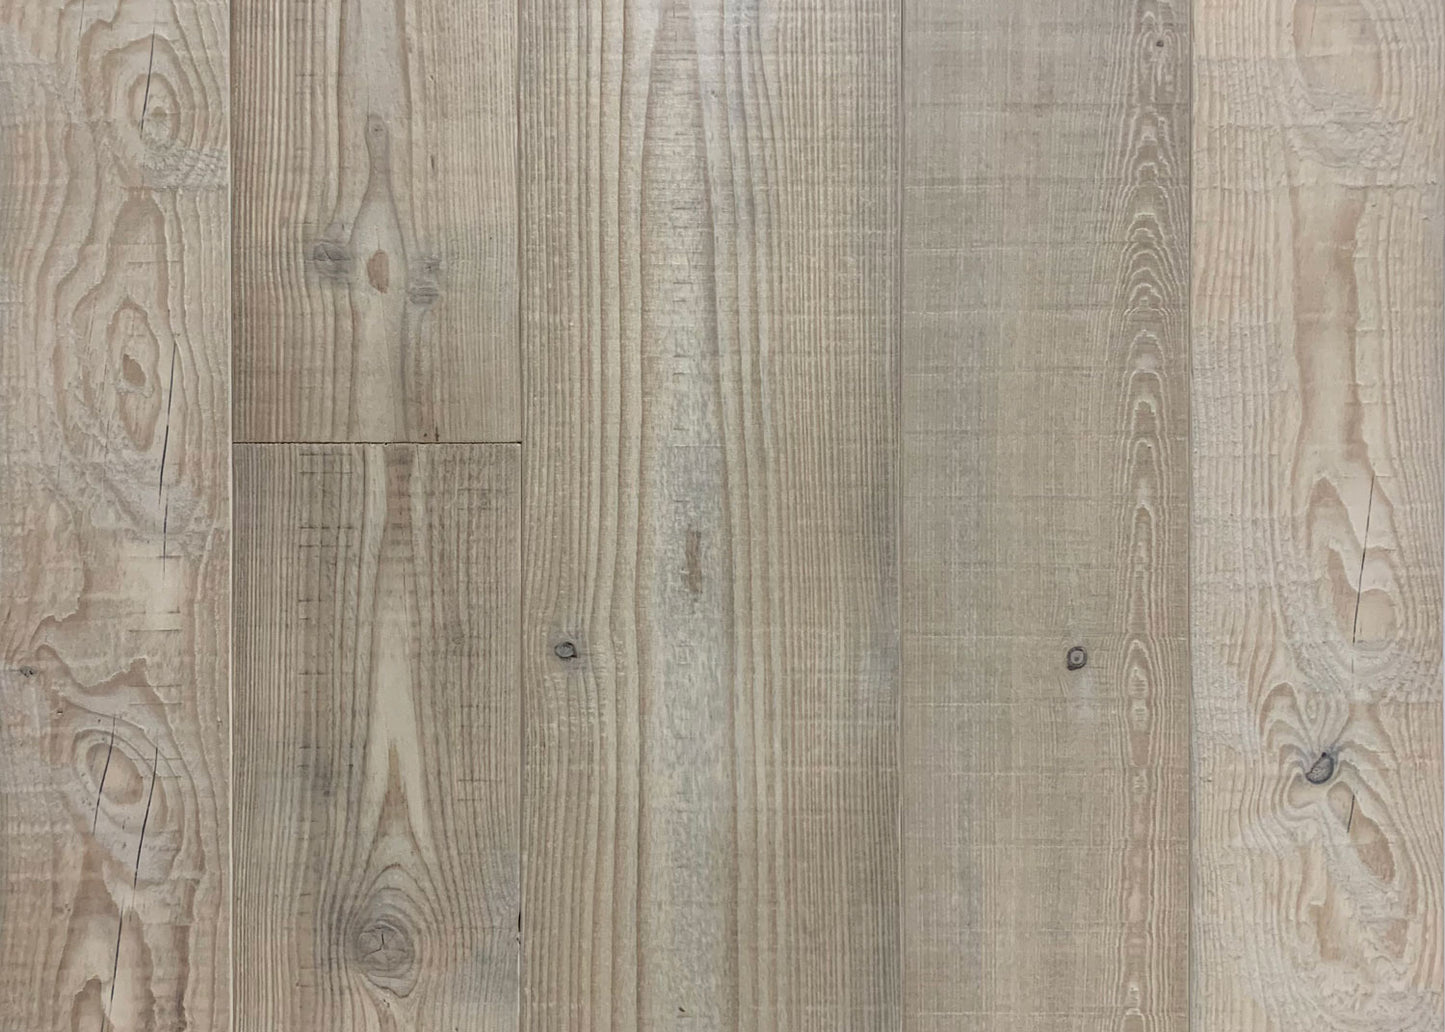 Reclaimed Washed Hayloft Spruce Flooring | Reclaimed Wood Flooring